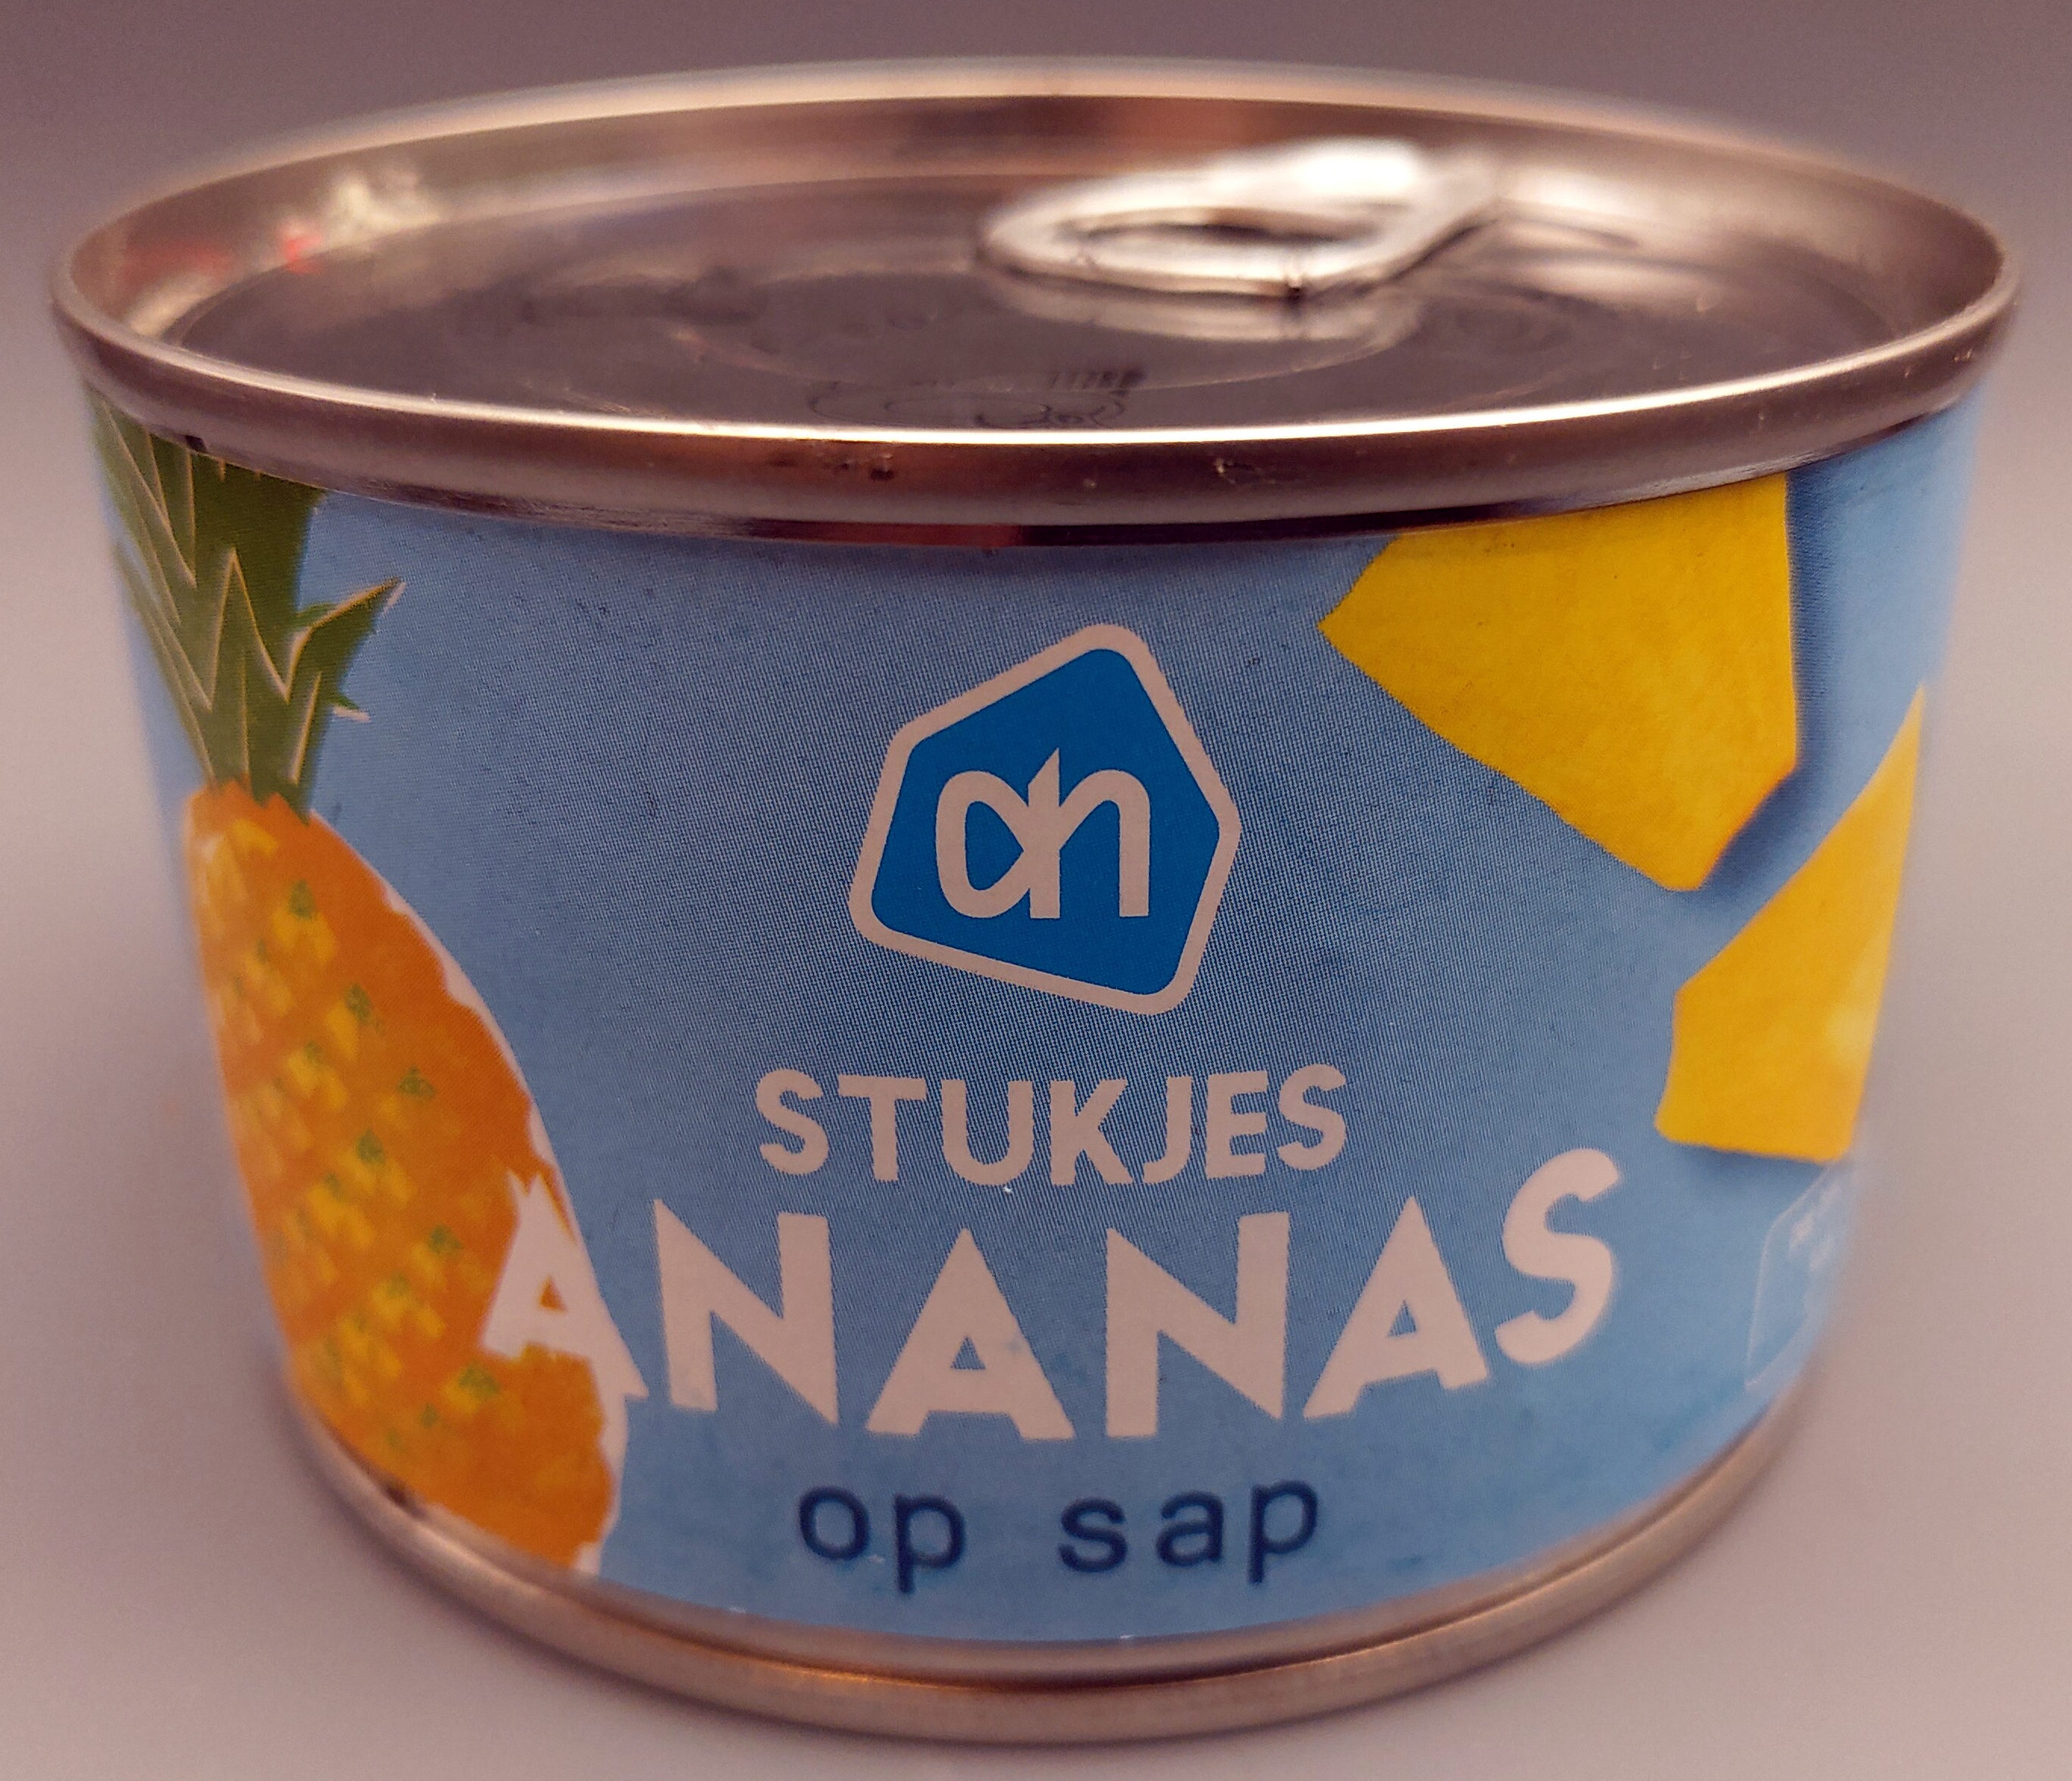 Stukjes ananas op sap - Produit - nl